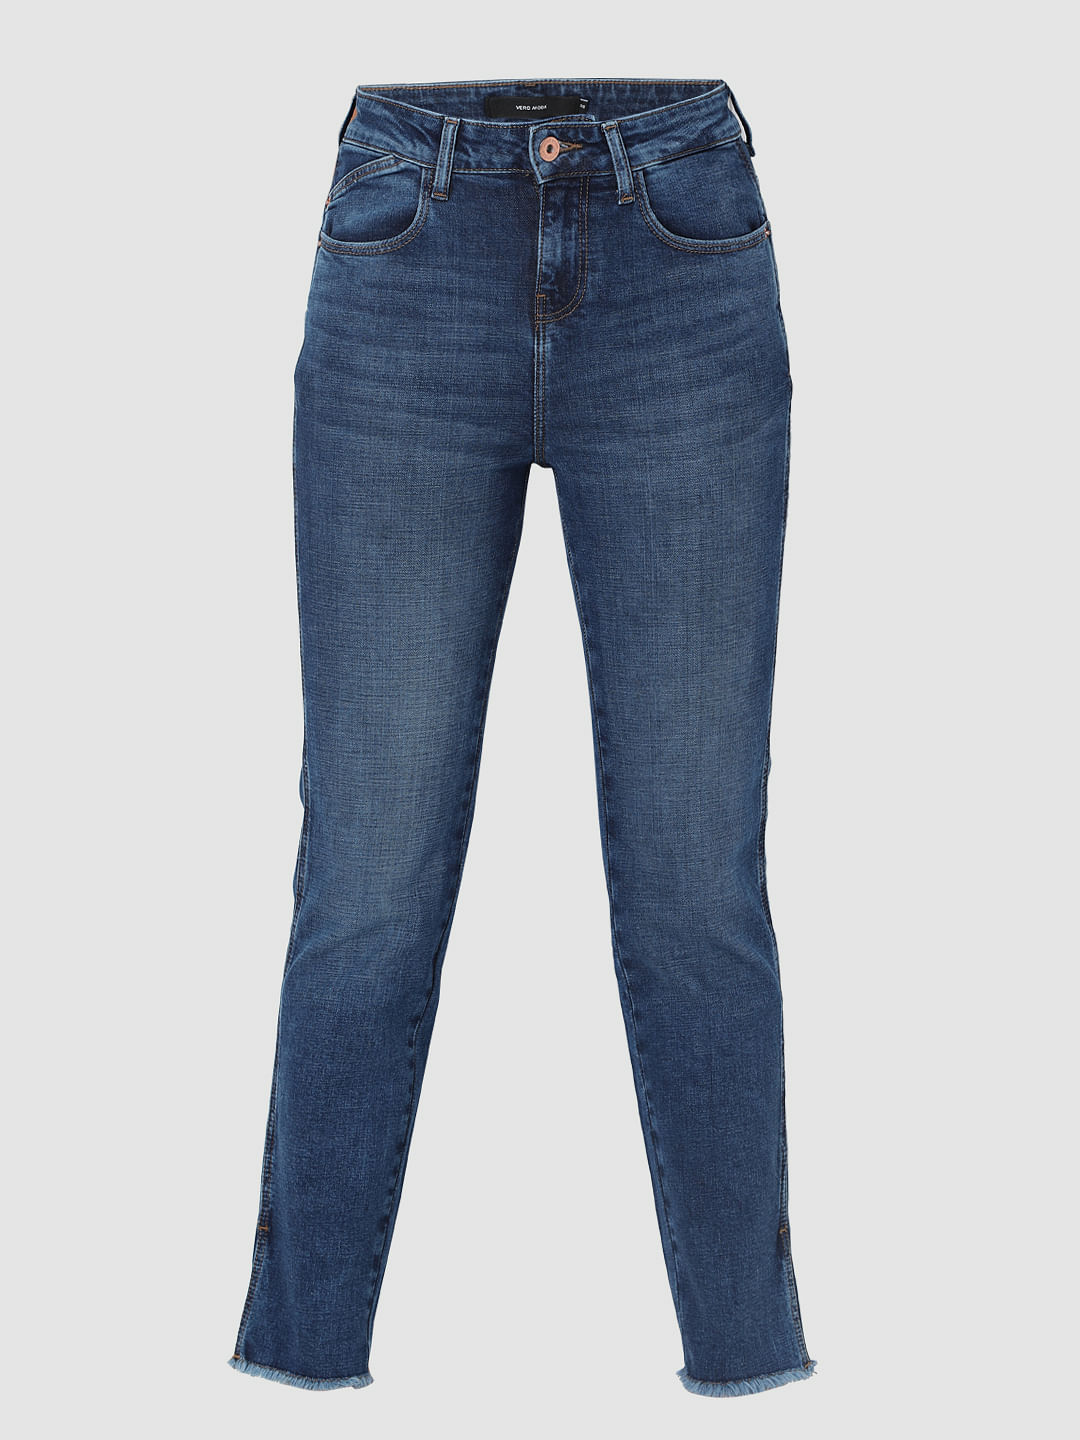 Jeans - Buy branded Jeans online cotton, denim, casual wear, party wear,  Jeans for Men at Limeroad.